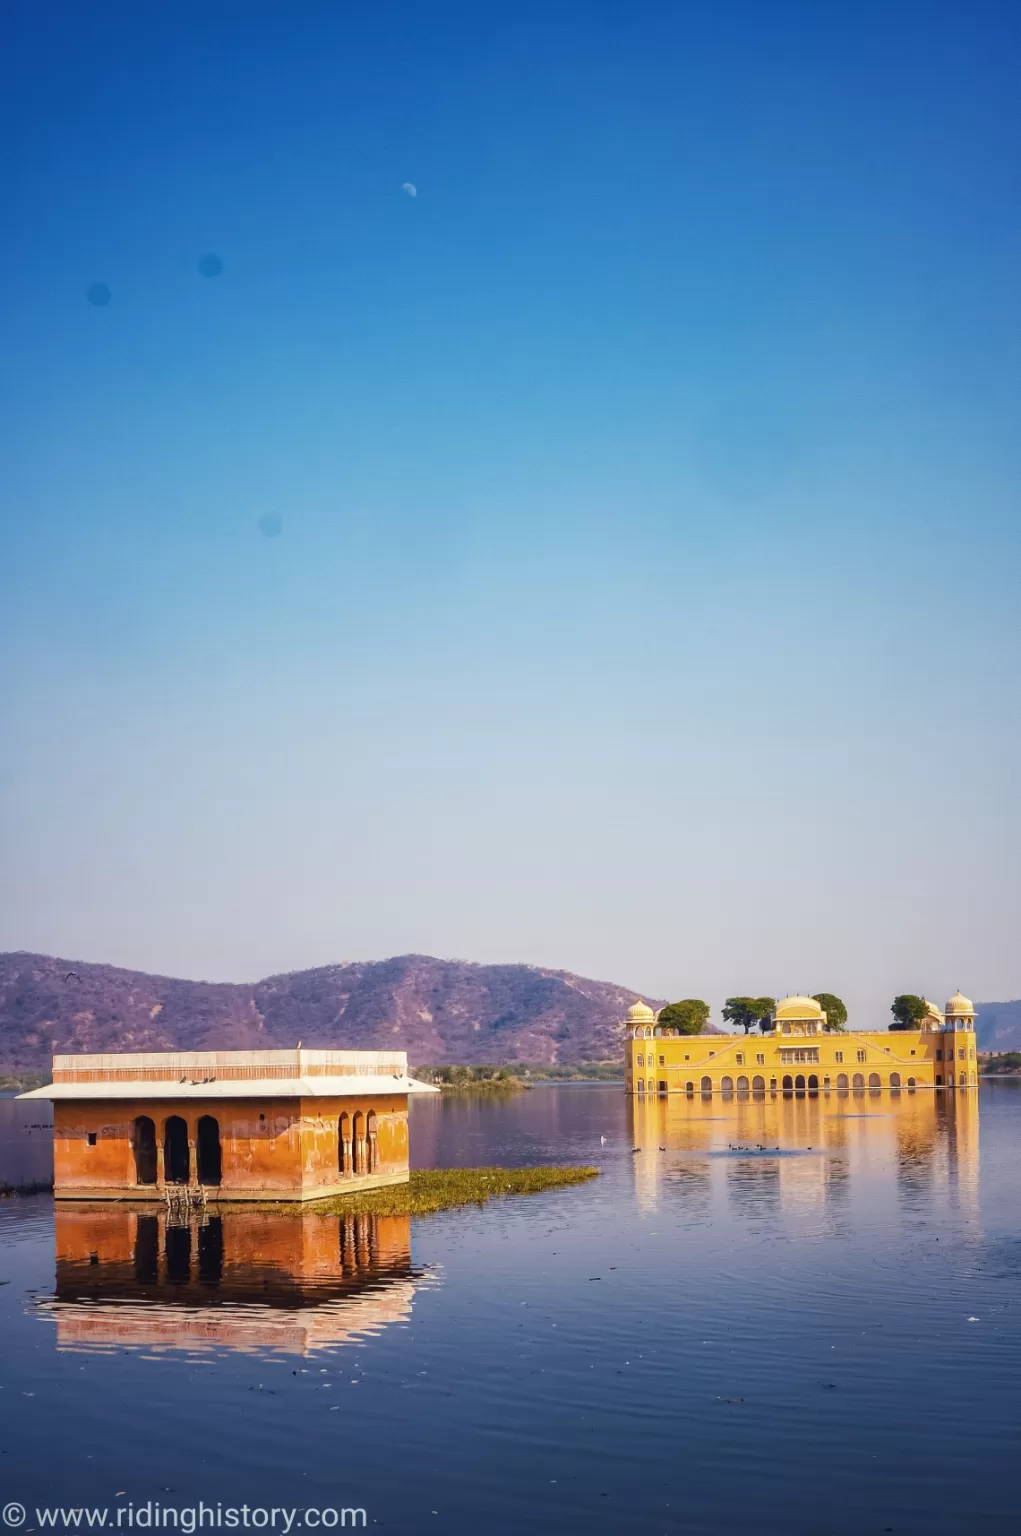 Photo of Jaipur By Yogesh Chandra Joshi